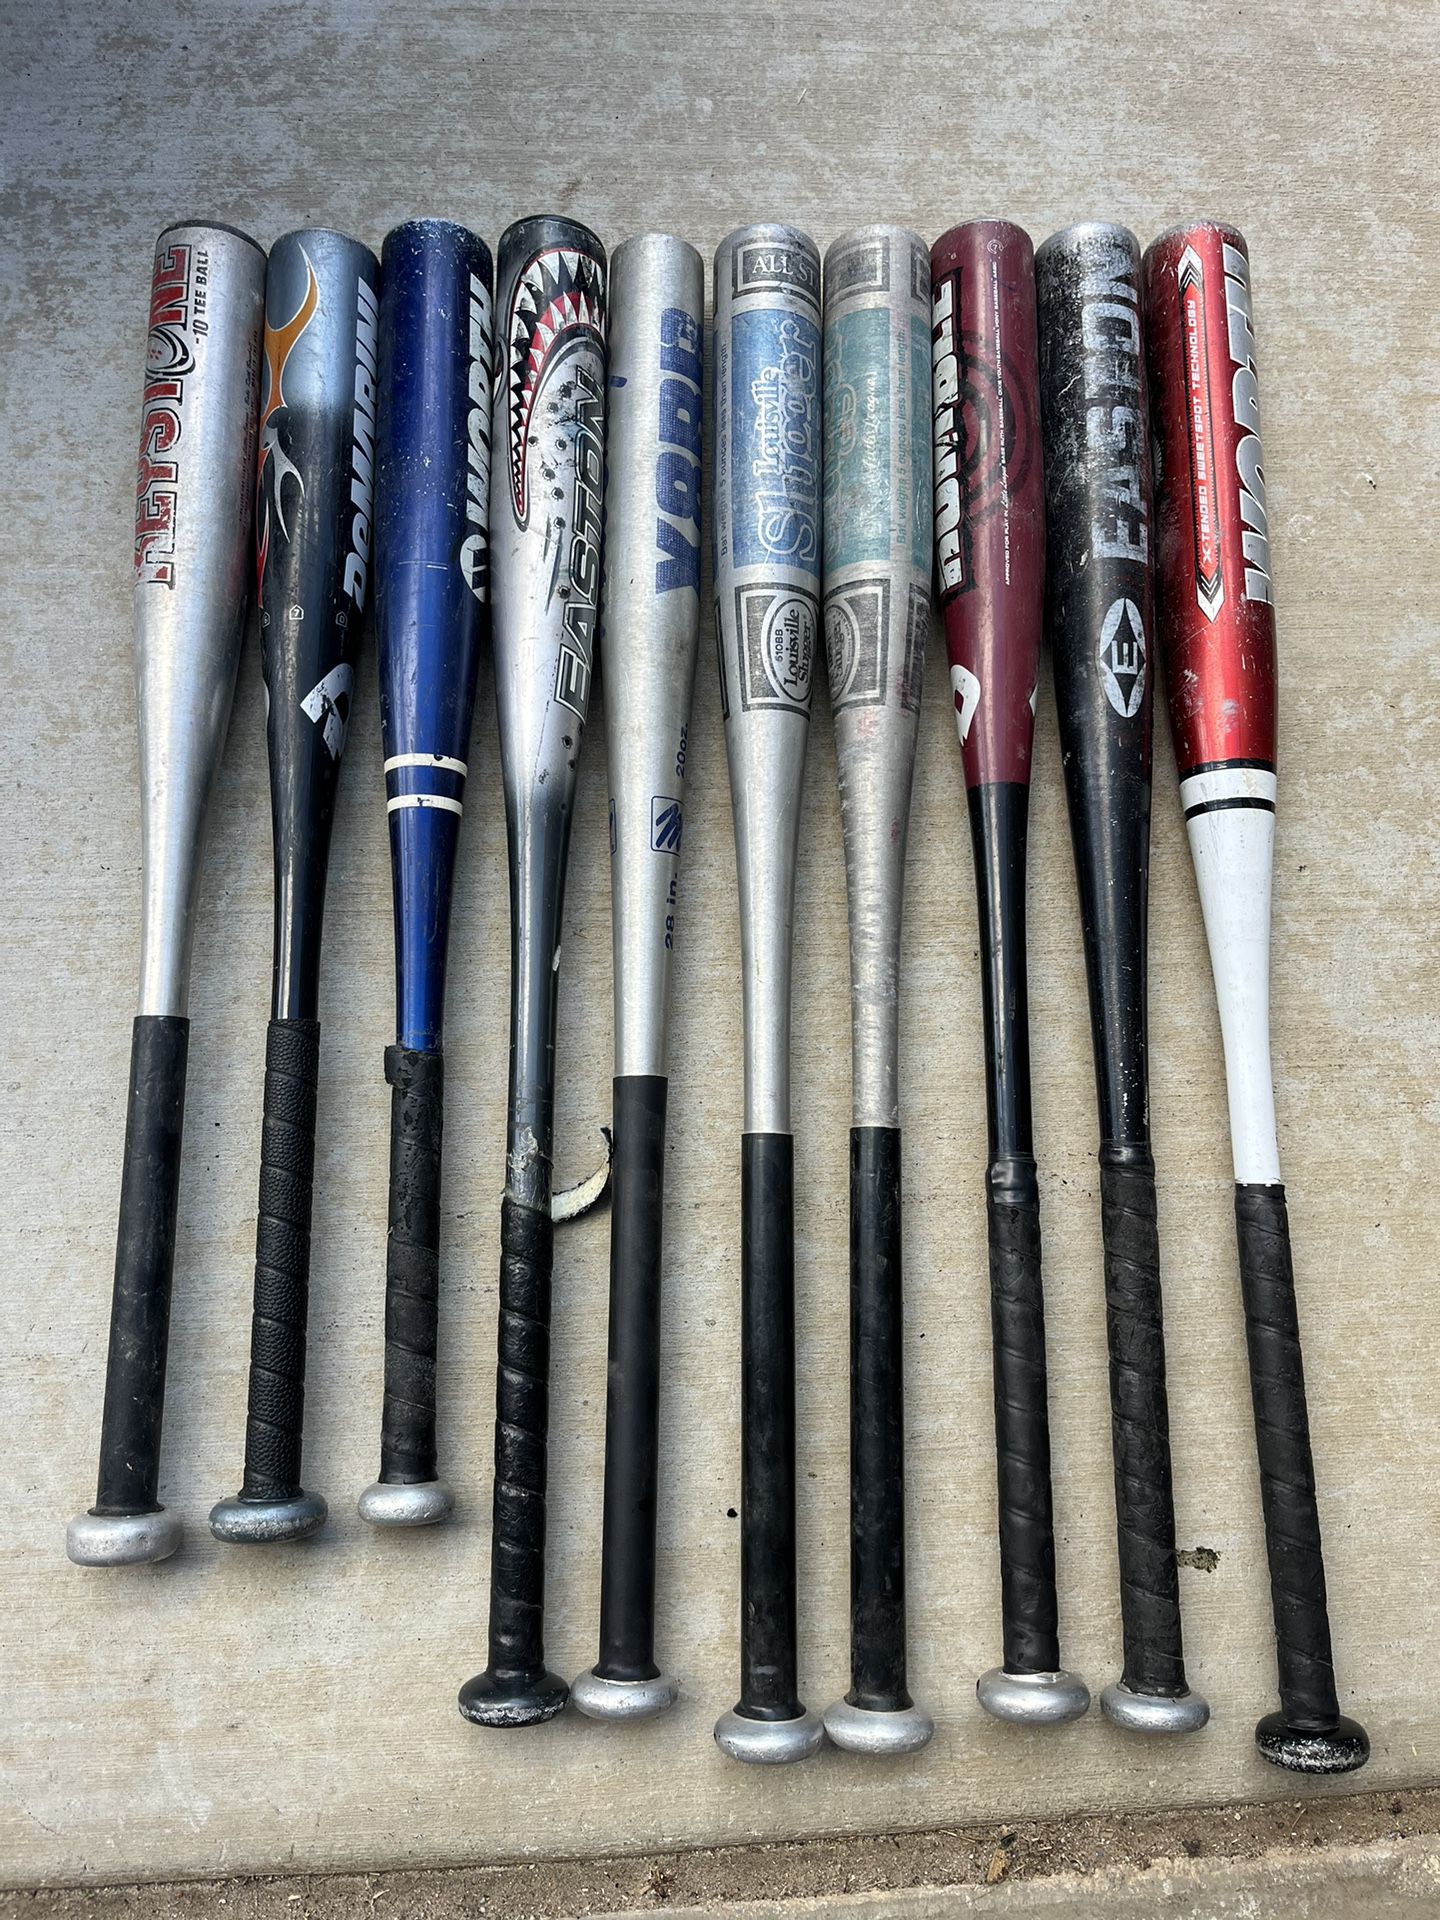 Baseball Bats Size 25-3, 29-6, 30-1 